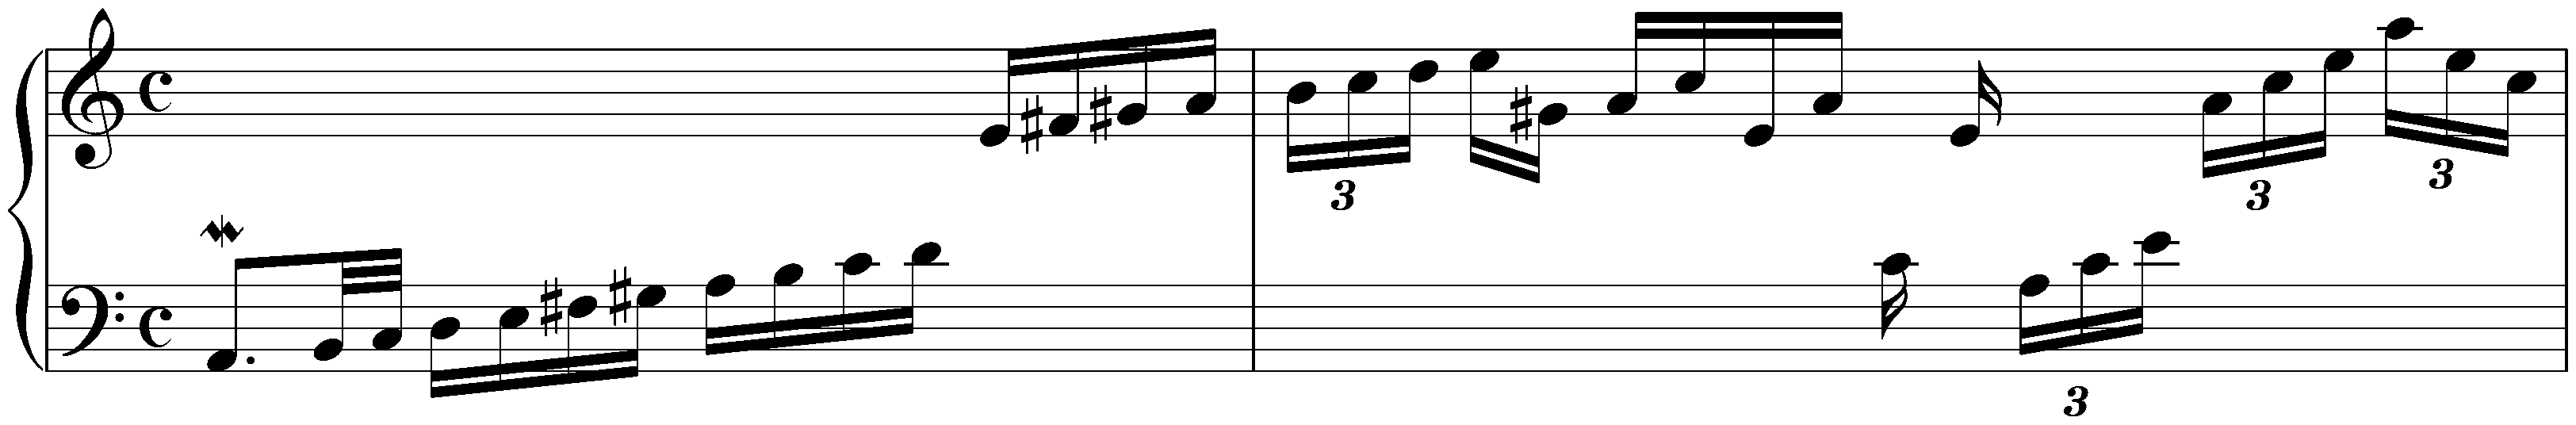 Preludio ed Allegro in A minor, HWV 576; 1. Preludio